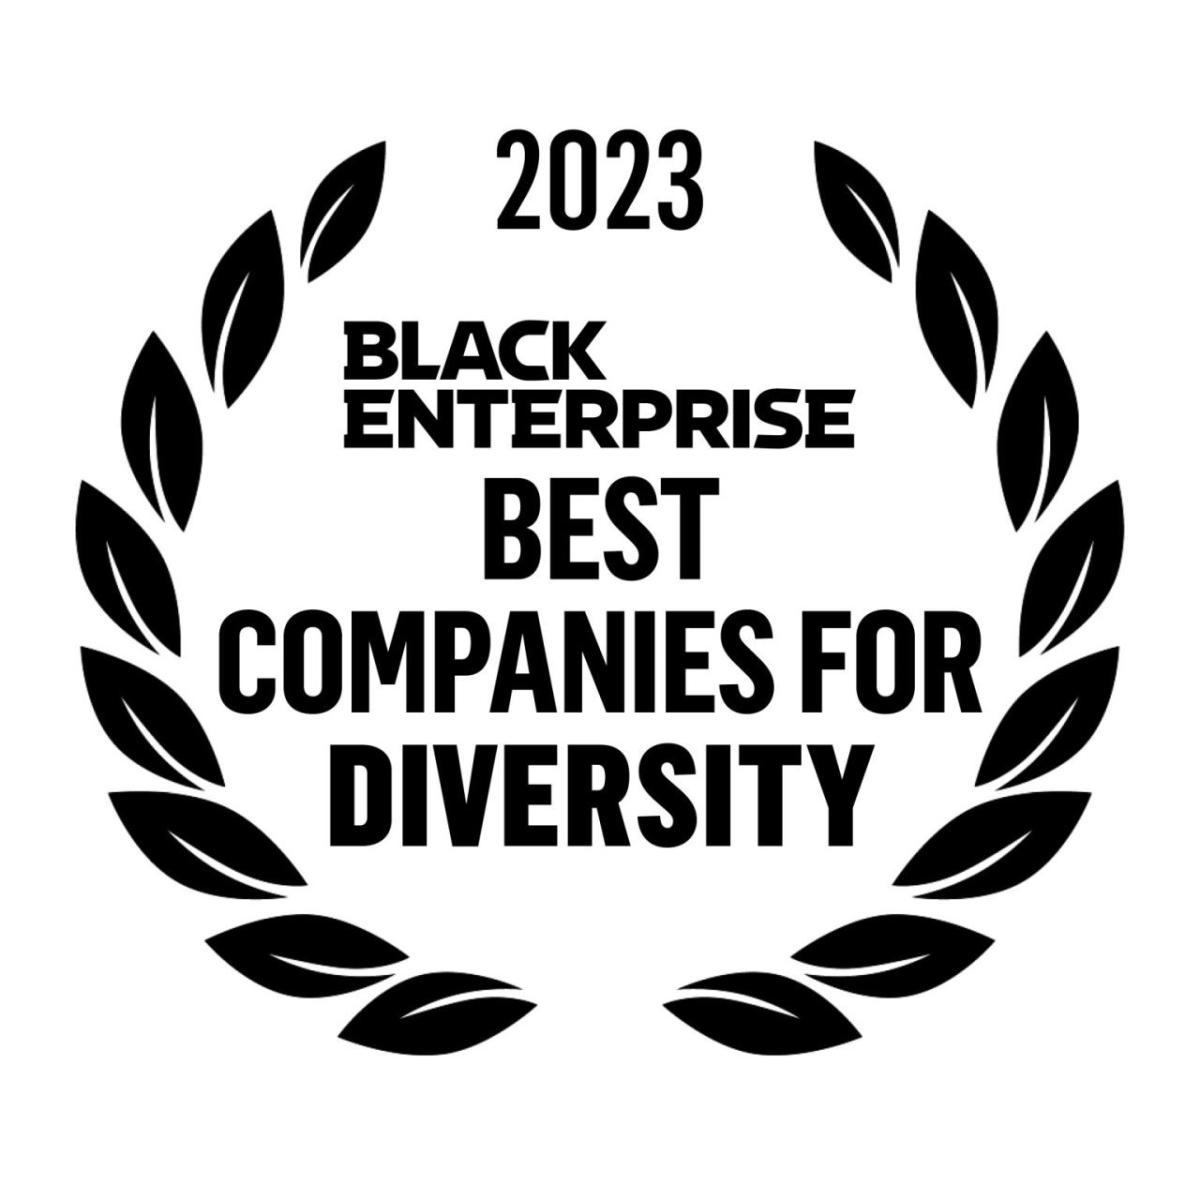 BLACK ENTERPRISE 2023 award logo